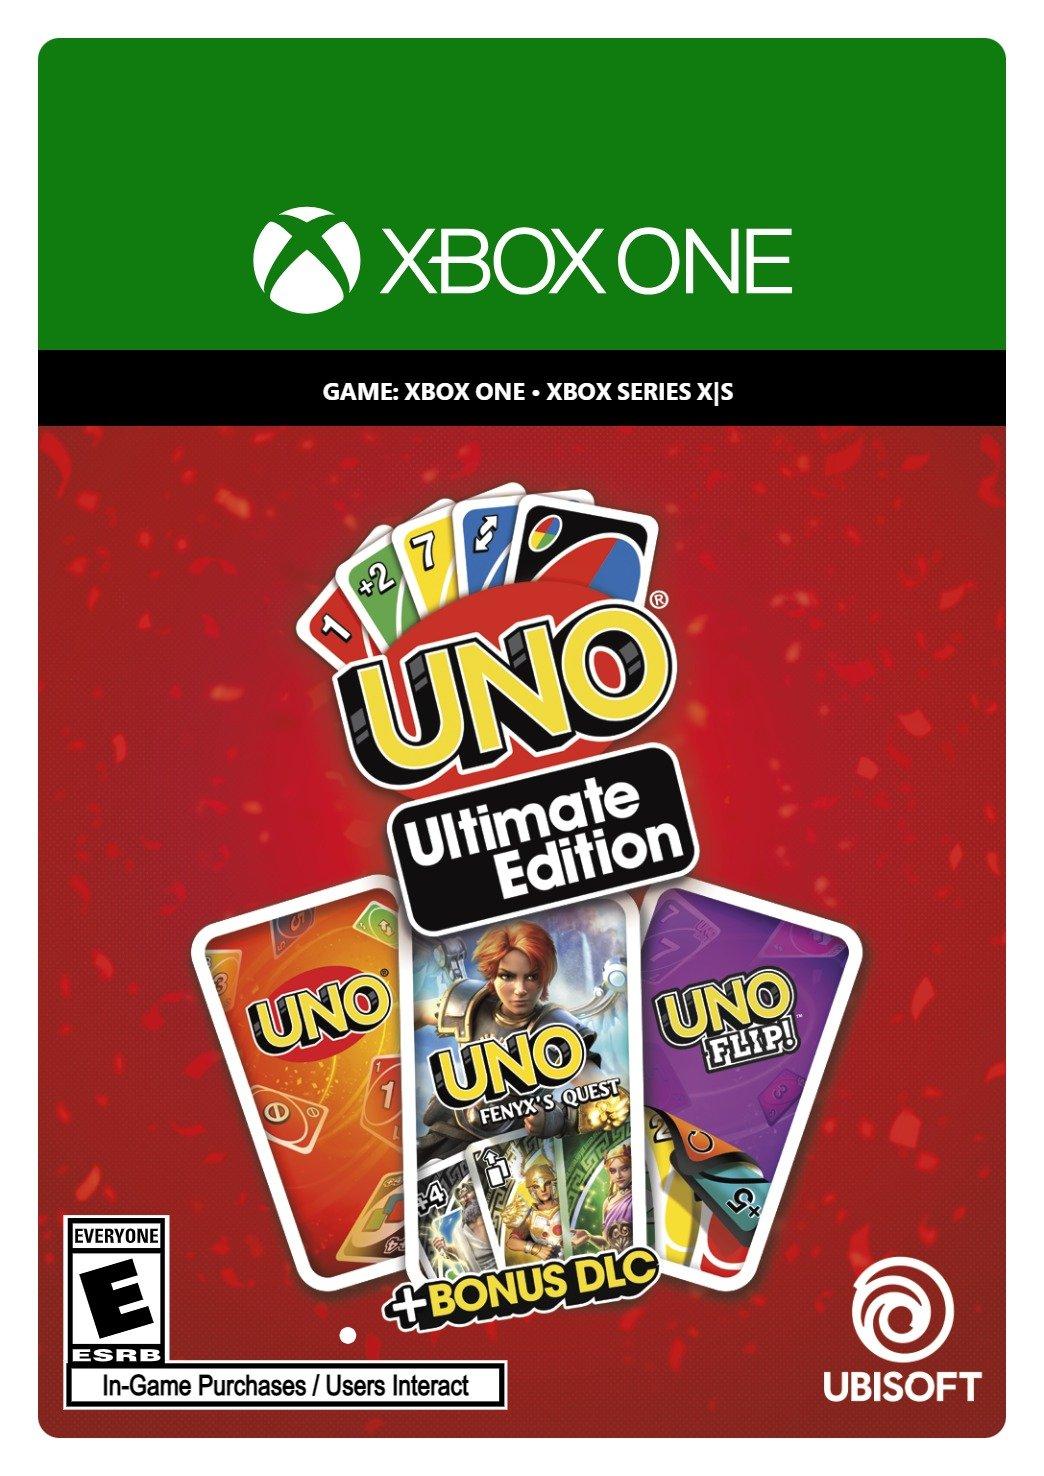 Buy UNO FLIP!, PC - Ubisoft Connect